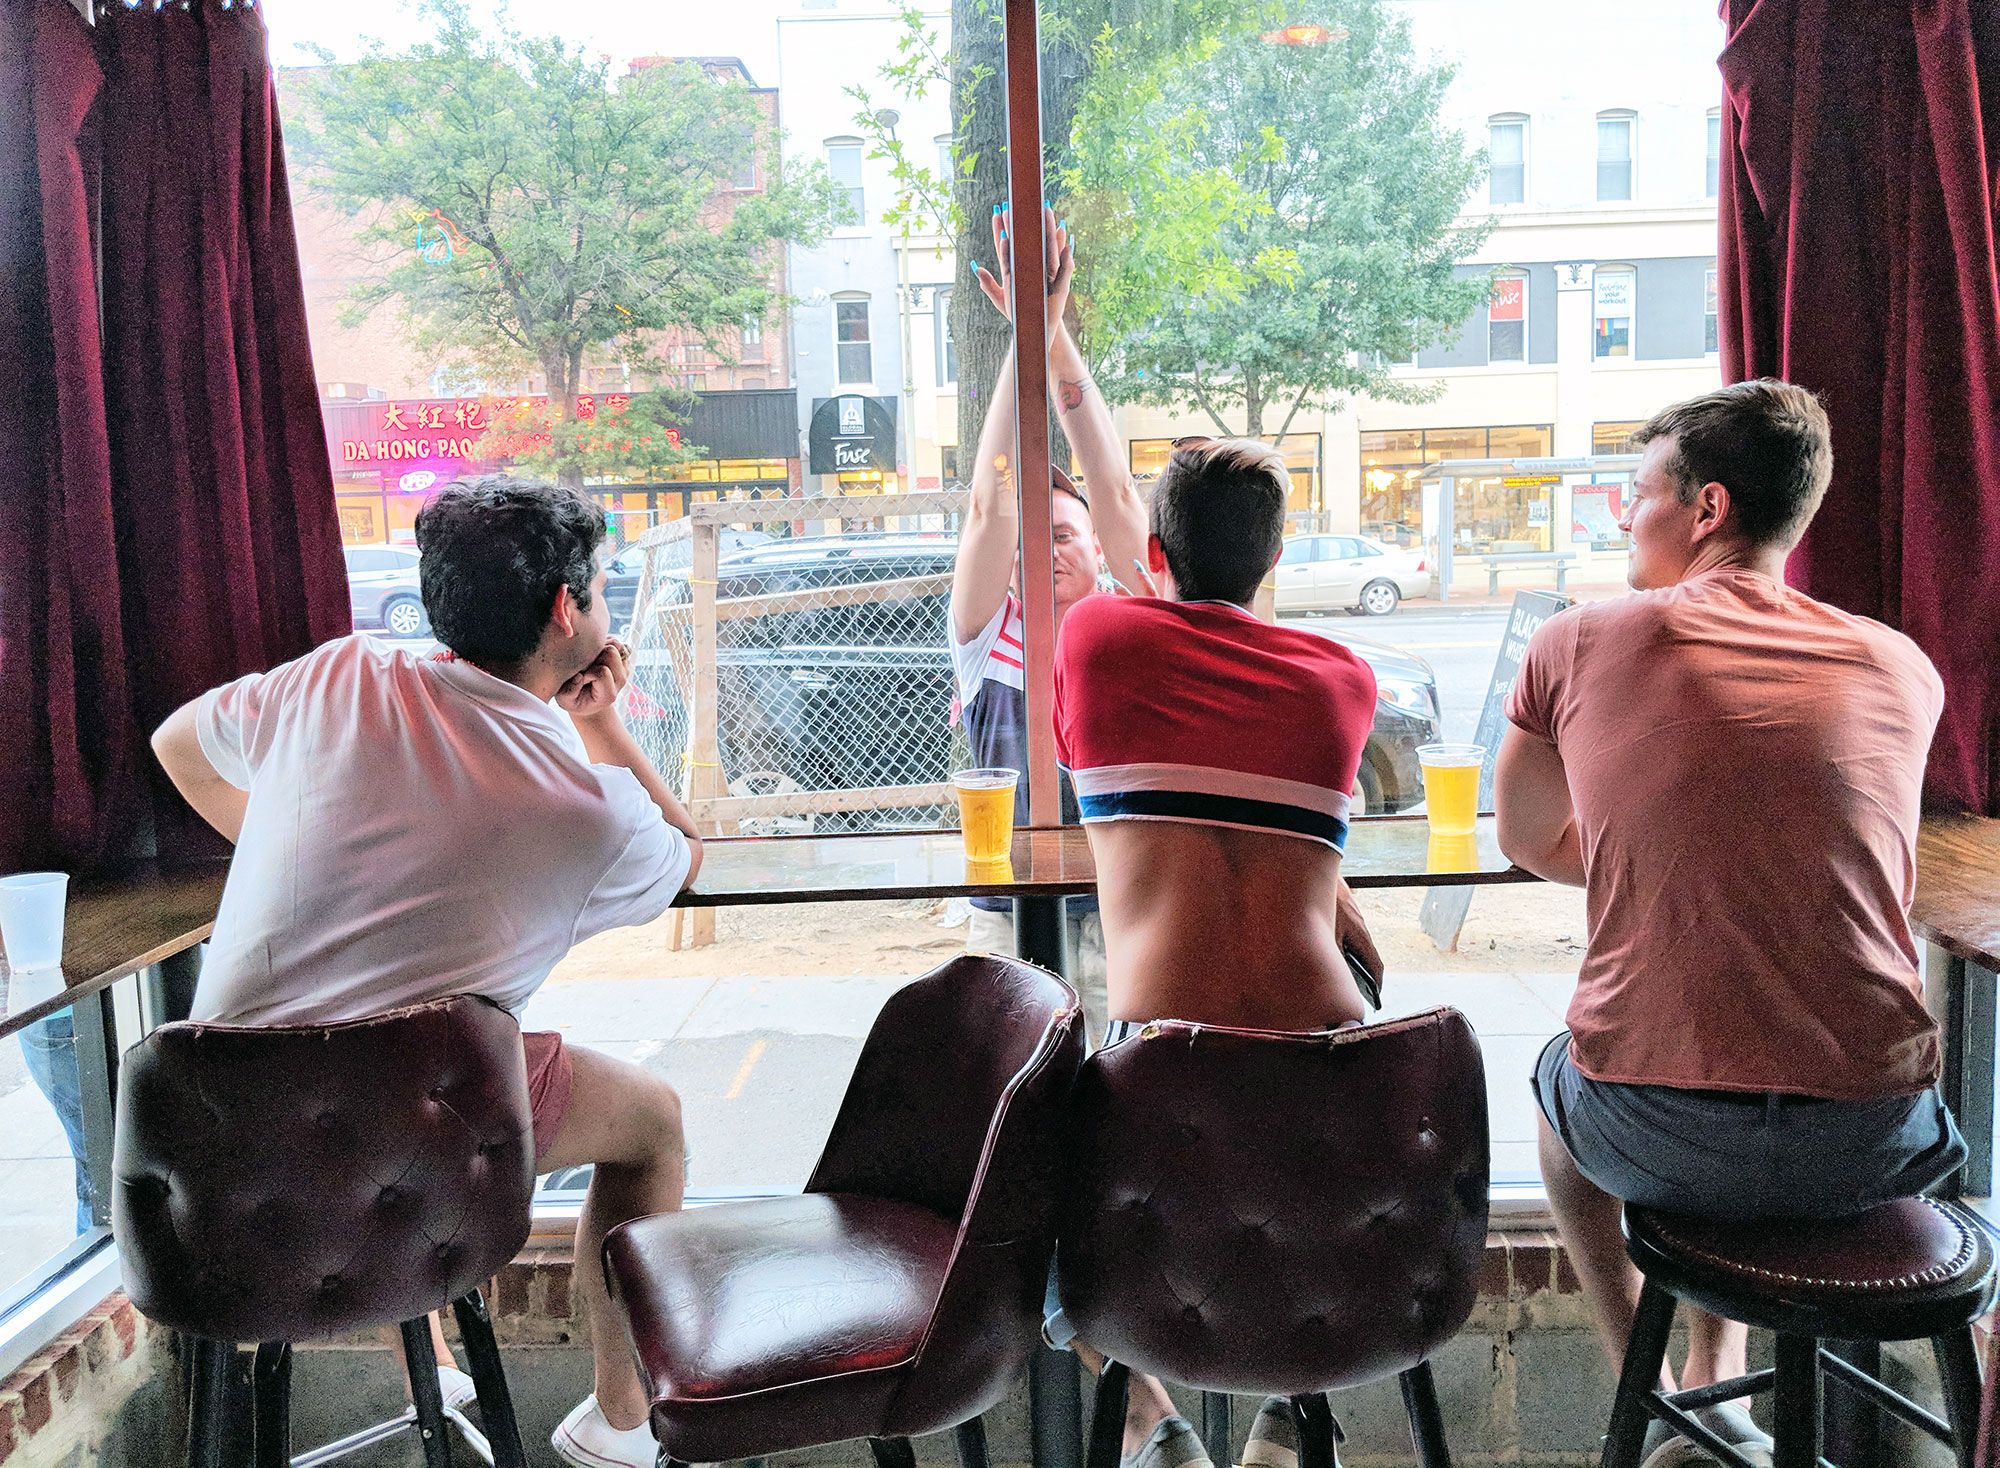 Boys at Trade Bar in Washington D.C.